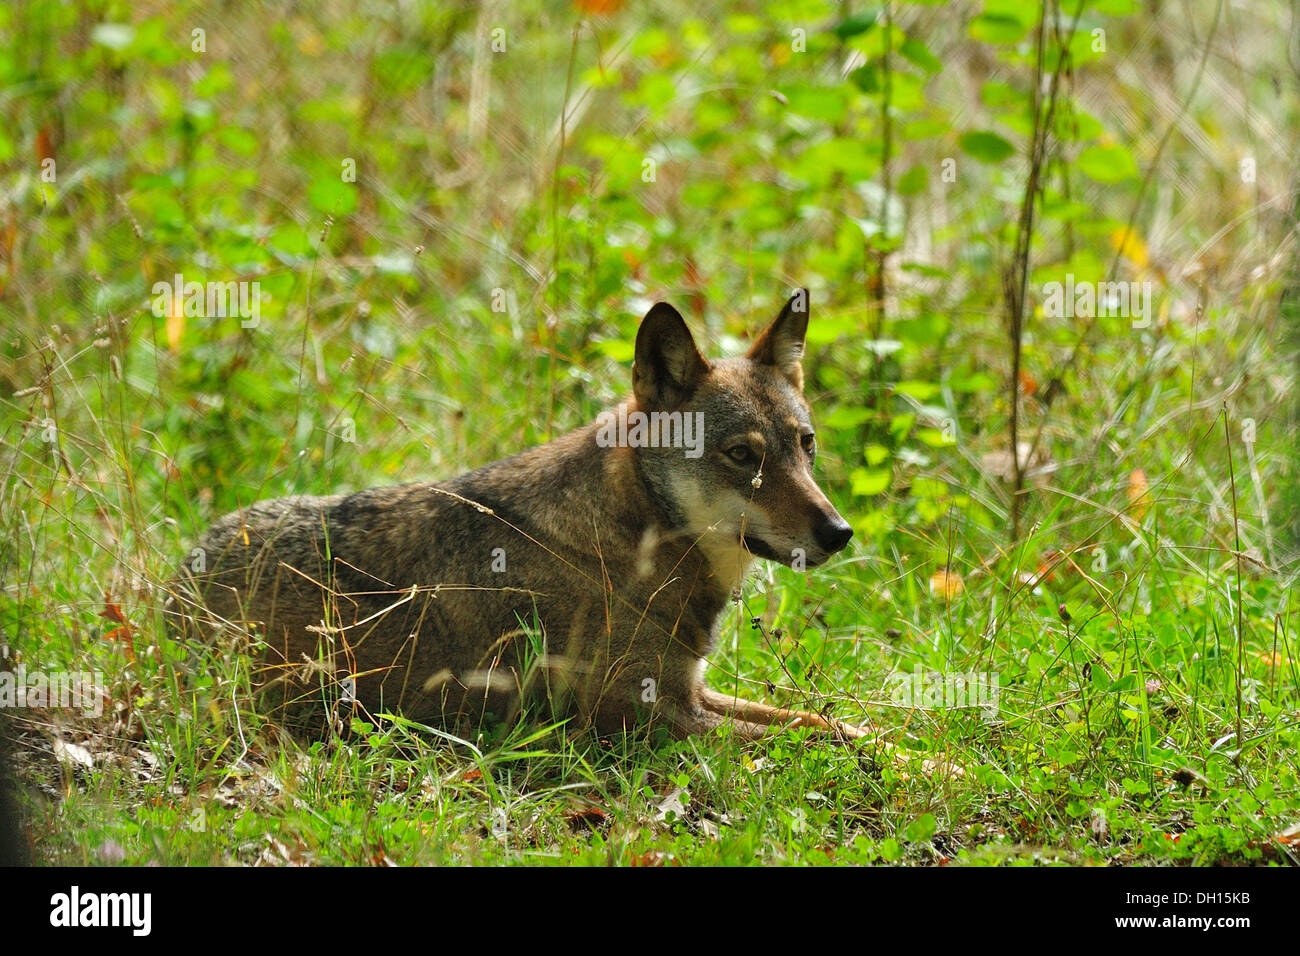 Italian Wolf Canis lupus italicus, Canidae, Abruzzo National Park, Italy mammal mammals wolfes carnivorous Roberto Nistri horizo Stock Photo